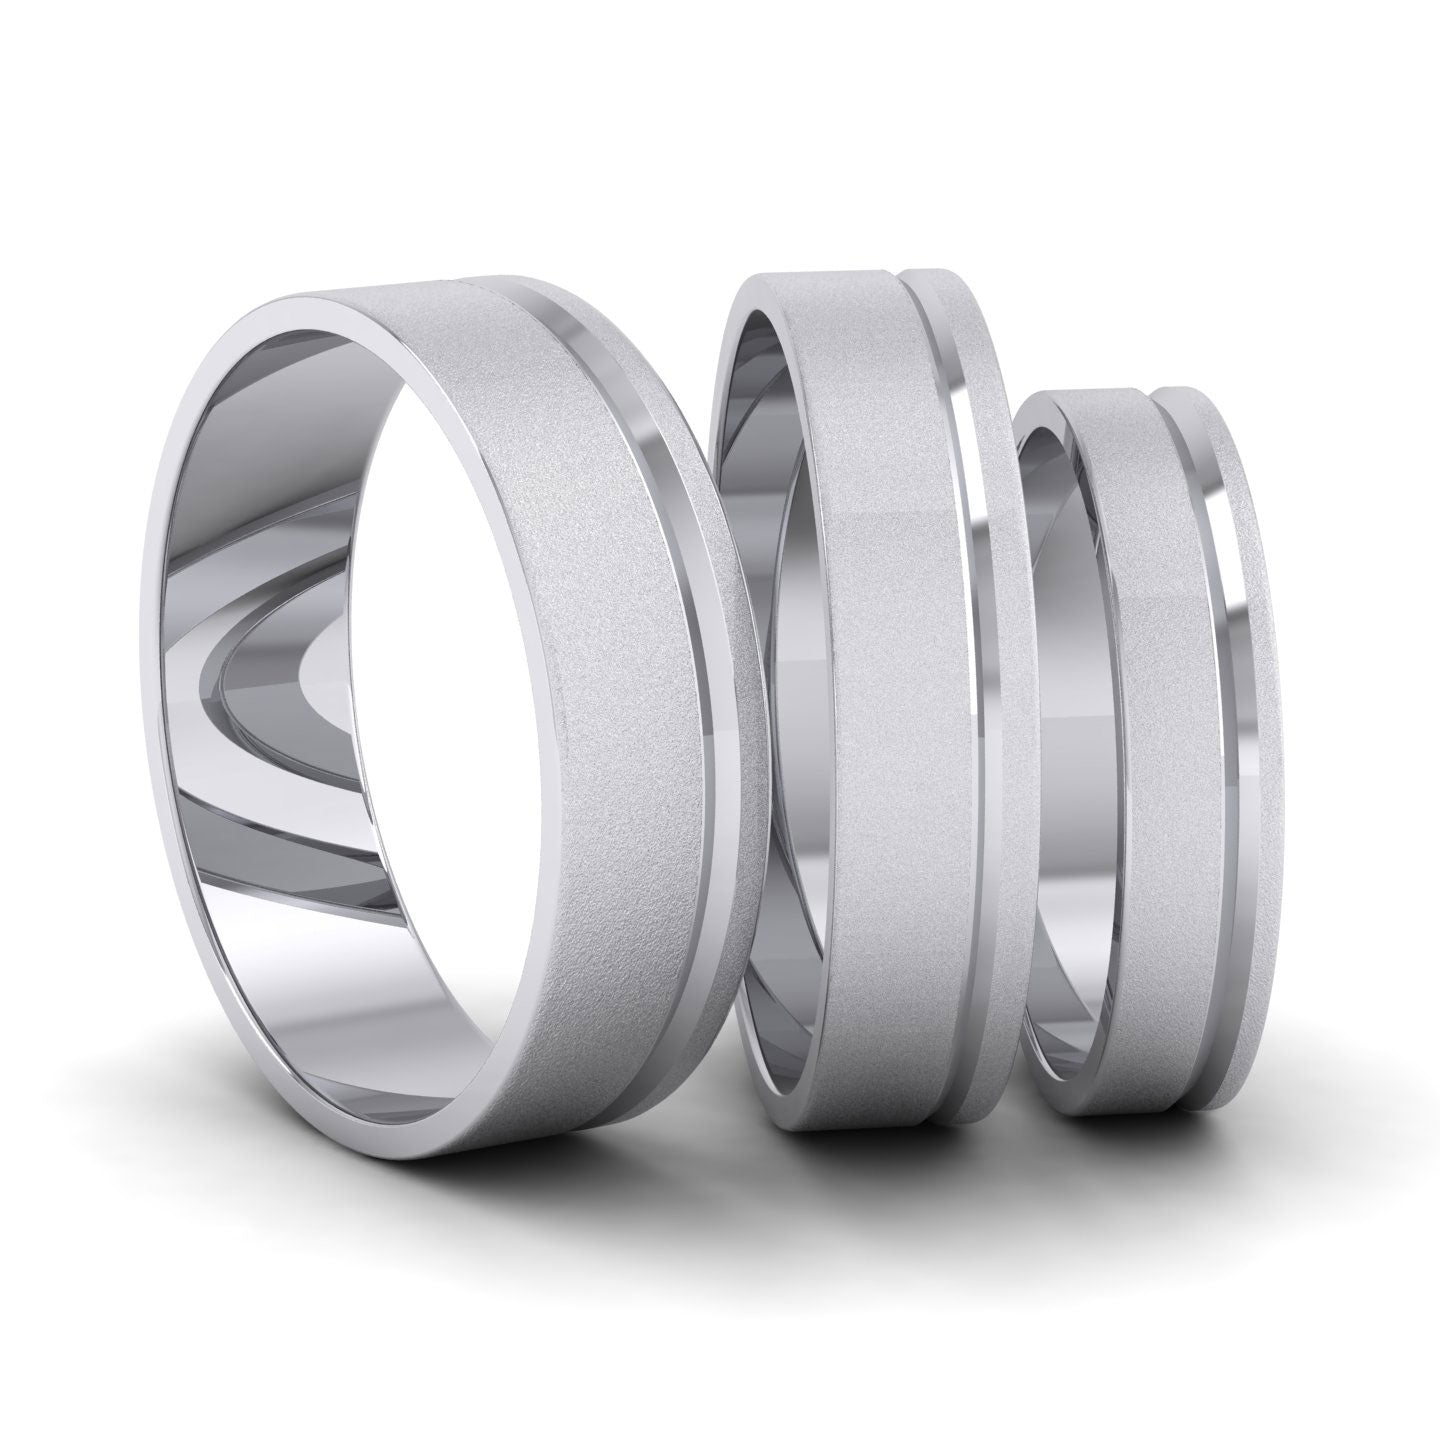 Asymmetric Line Pattern 950 Palladium 6mm Flat Wedding Ring